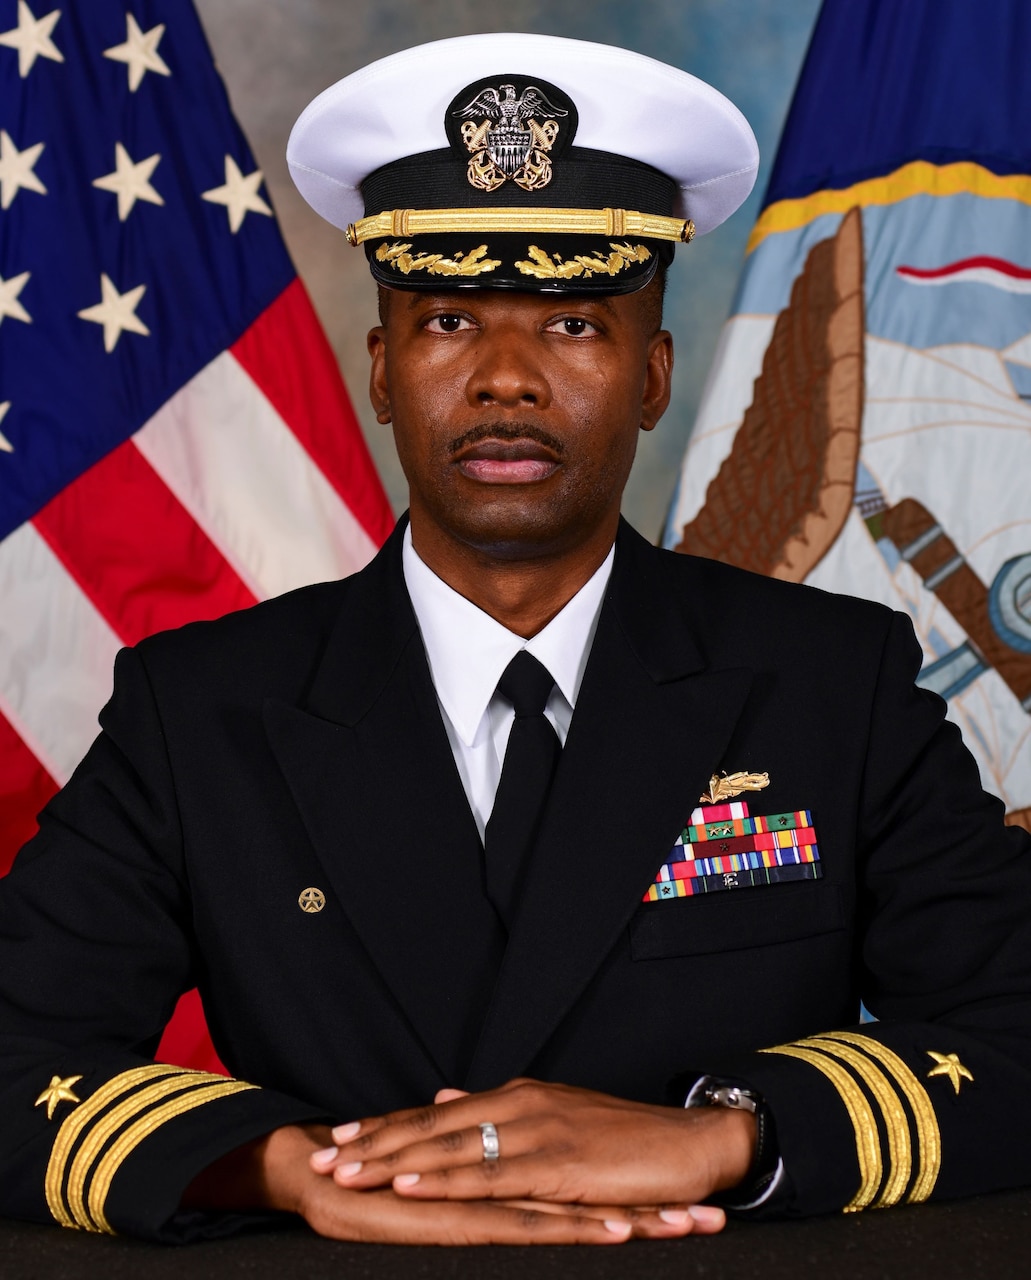 Commander Christopher O. Thomas